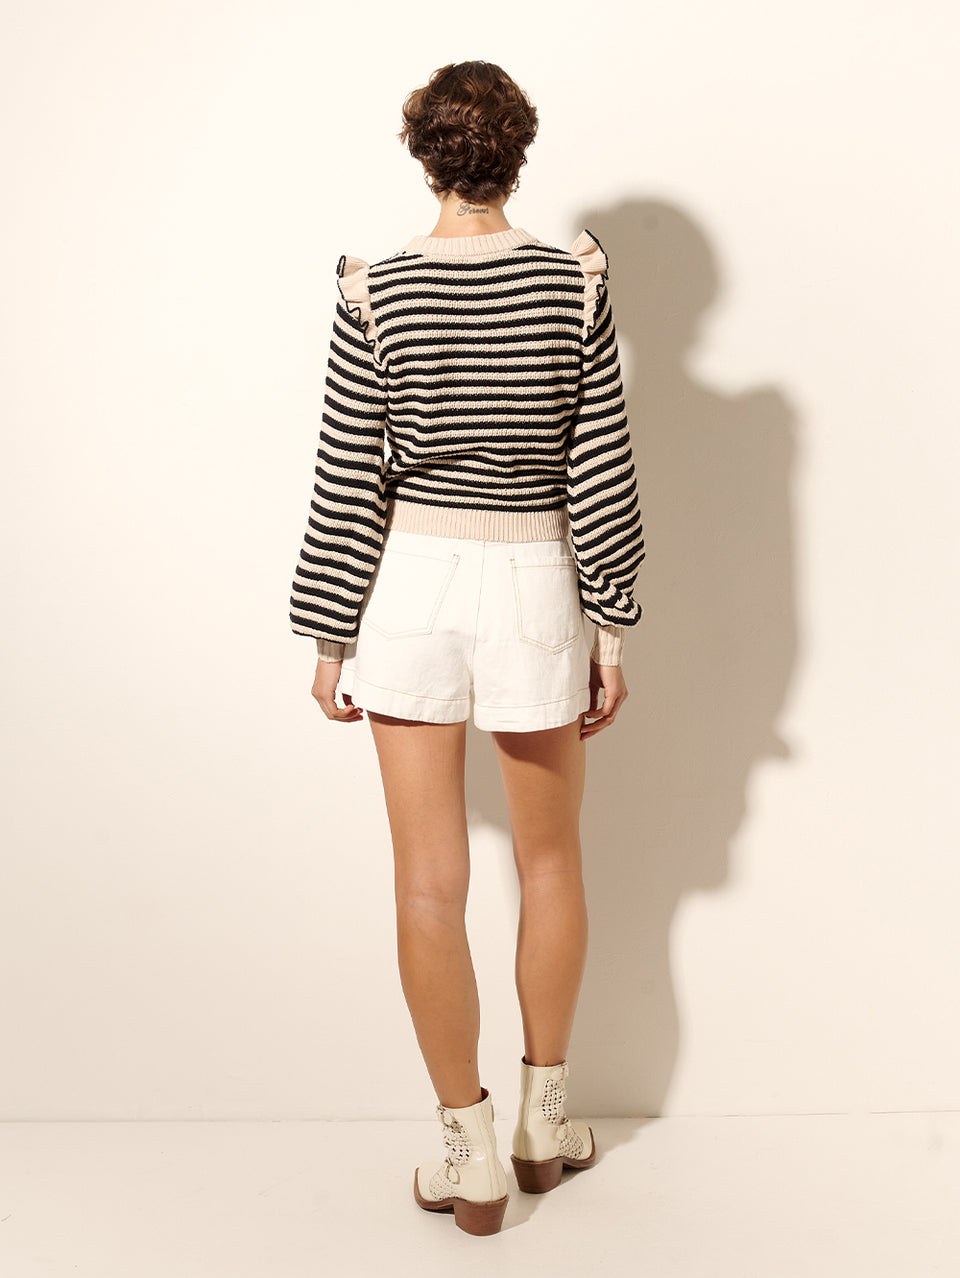 Anita Knit Top KIVARI | Model wears black and white striped knit jumper back views